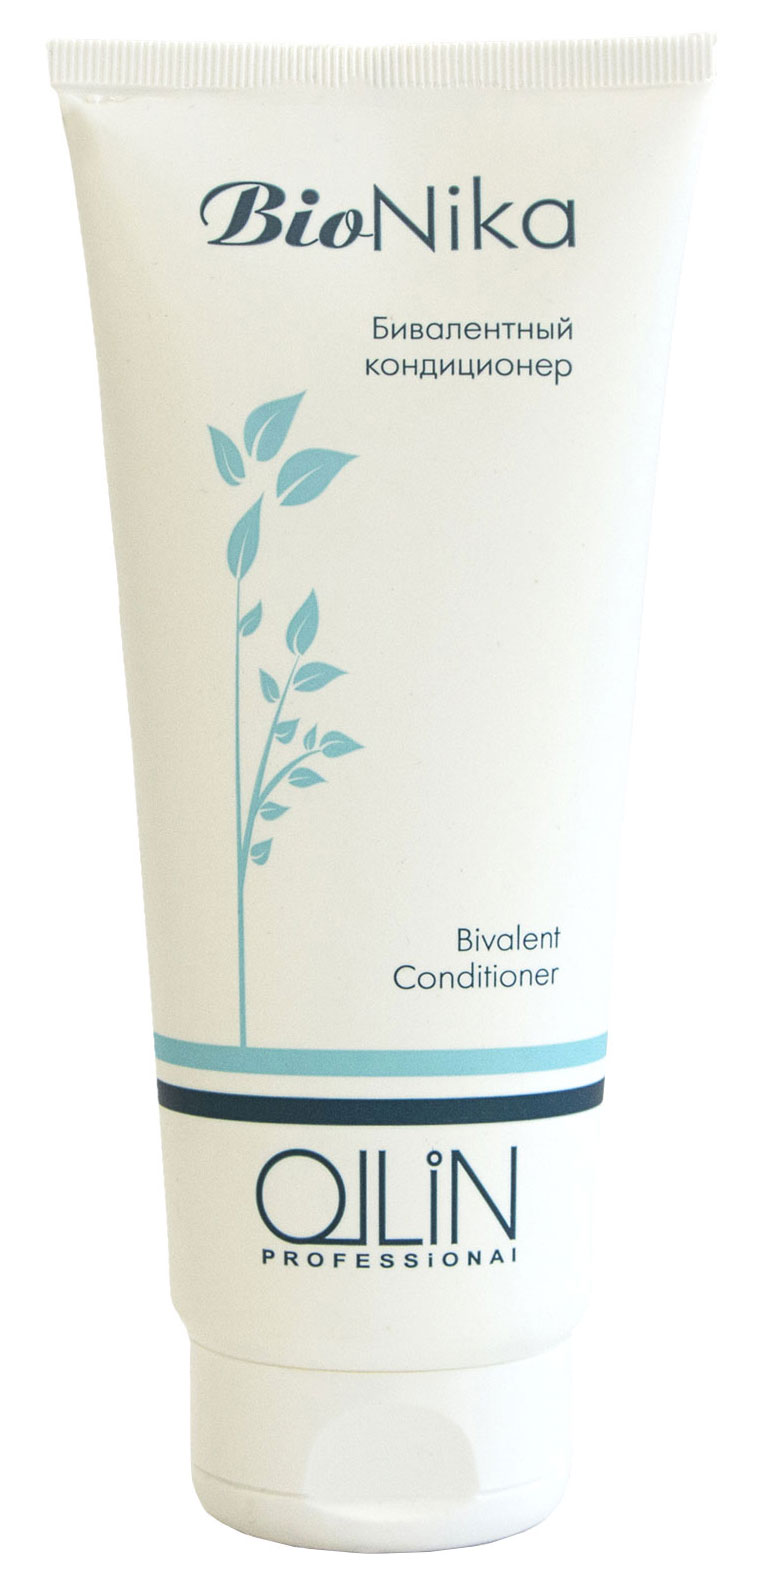 Кондиционер для волос Ollin Professional BioNika Bivalent 200 мл кондиционер стабилизатор рн 3 5 сonditioner stabilizer ph 3 5 ollin service line 726758 250 мл